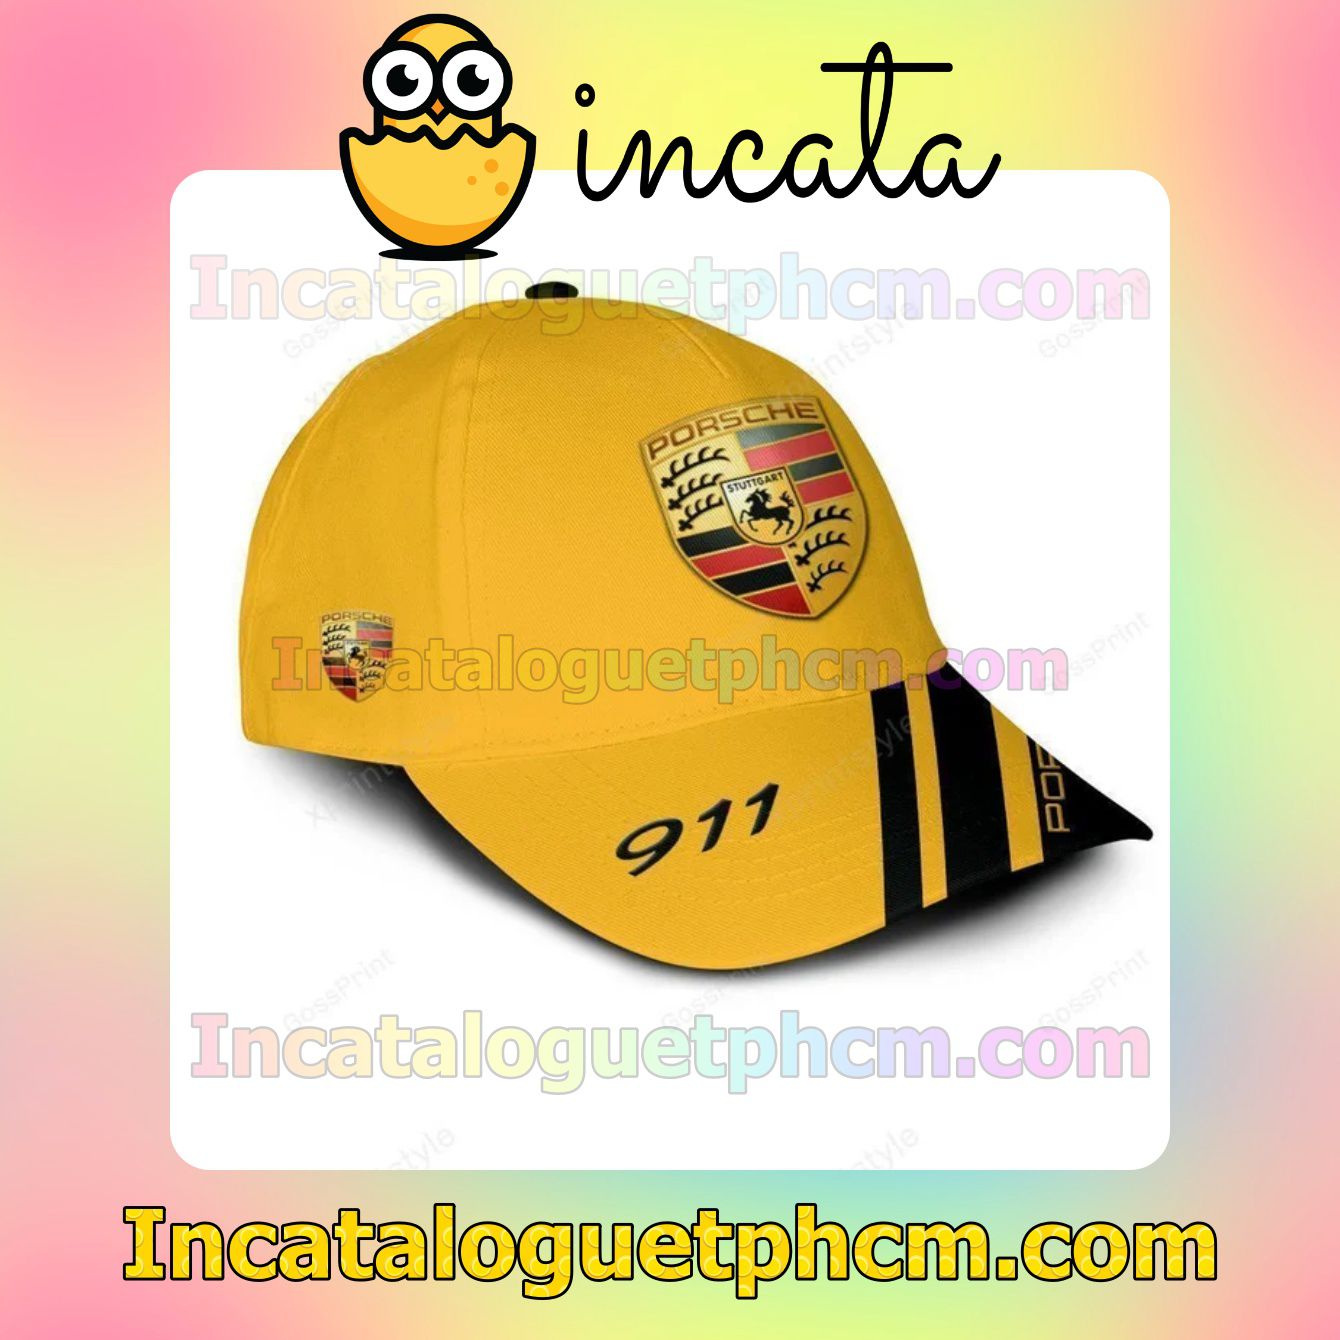 Around Me Porsche 911 Yellow Classic Hat Caps Gift For Men